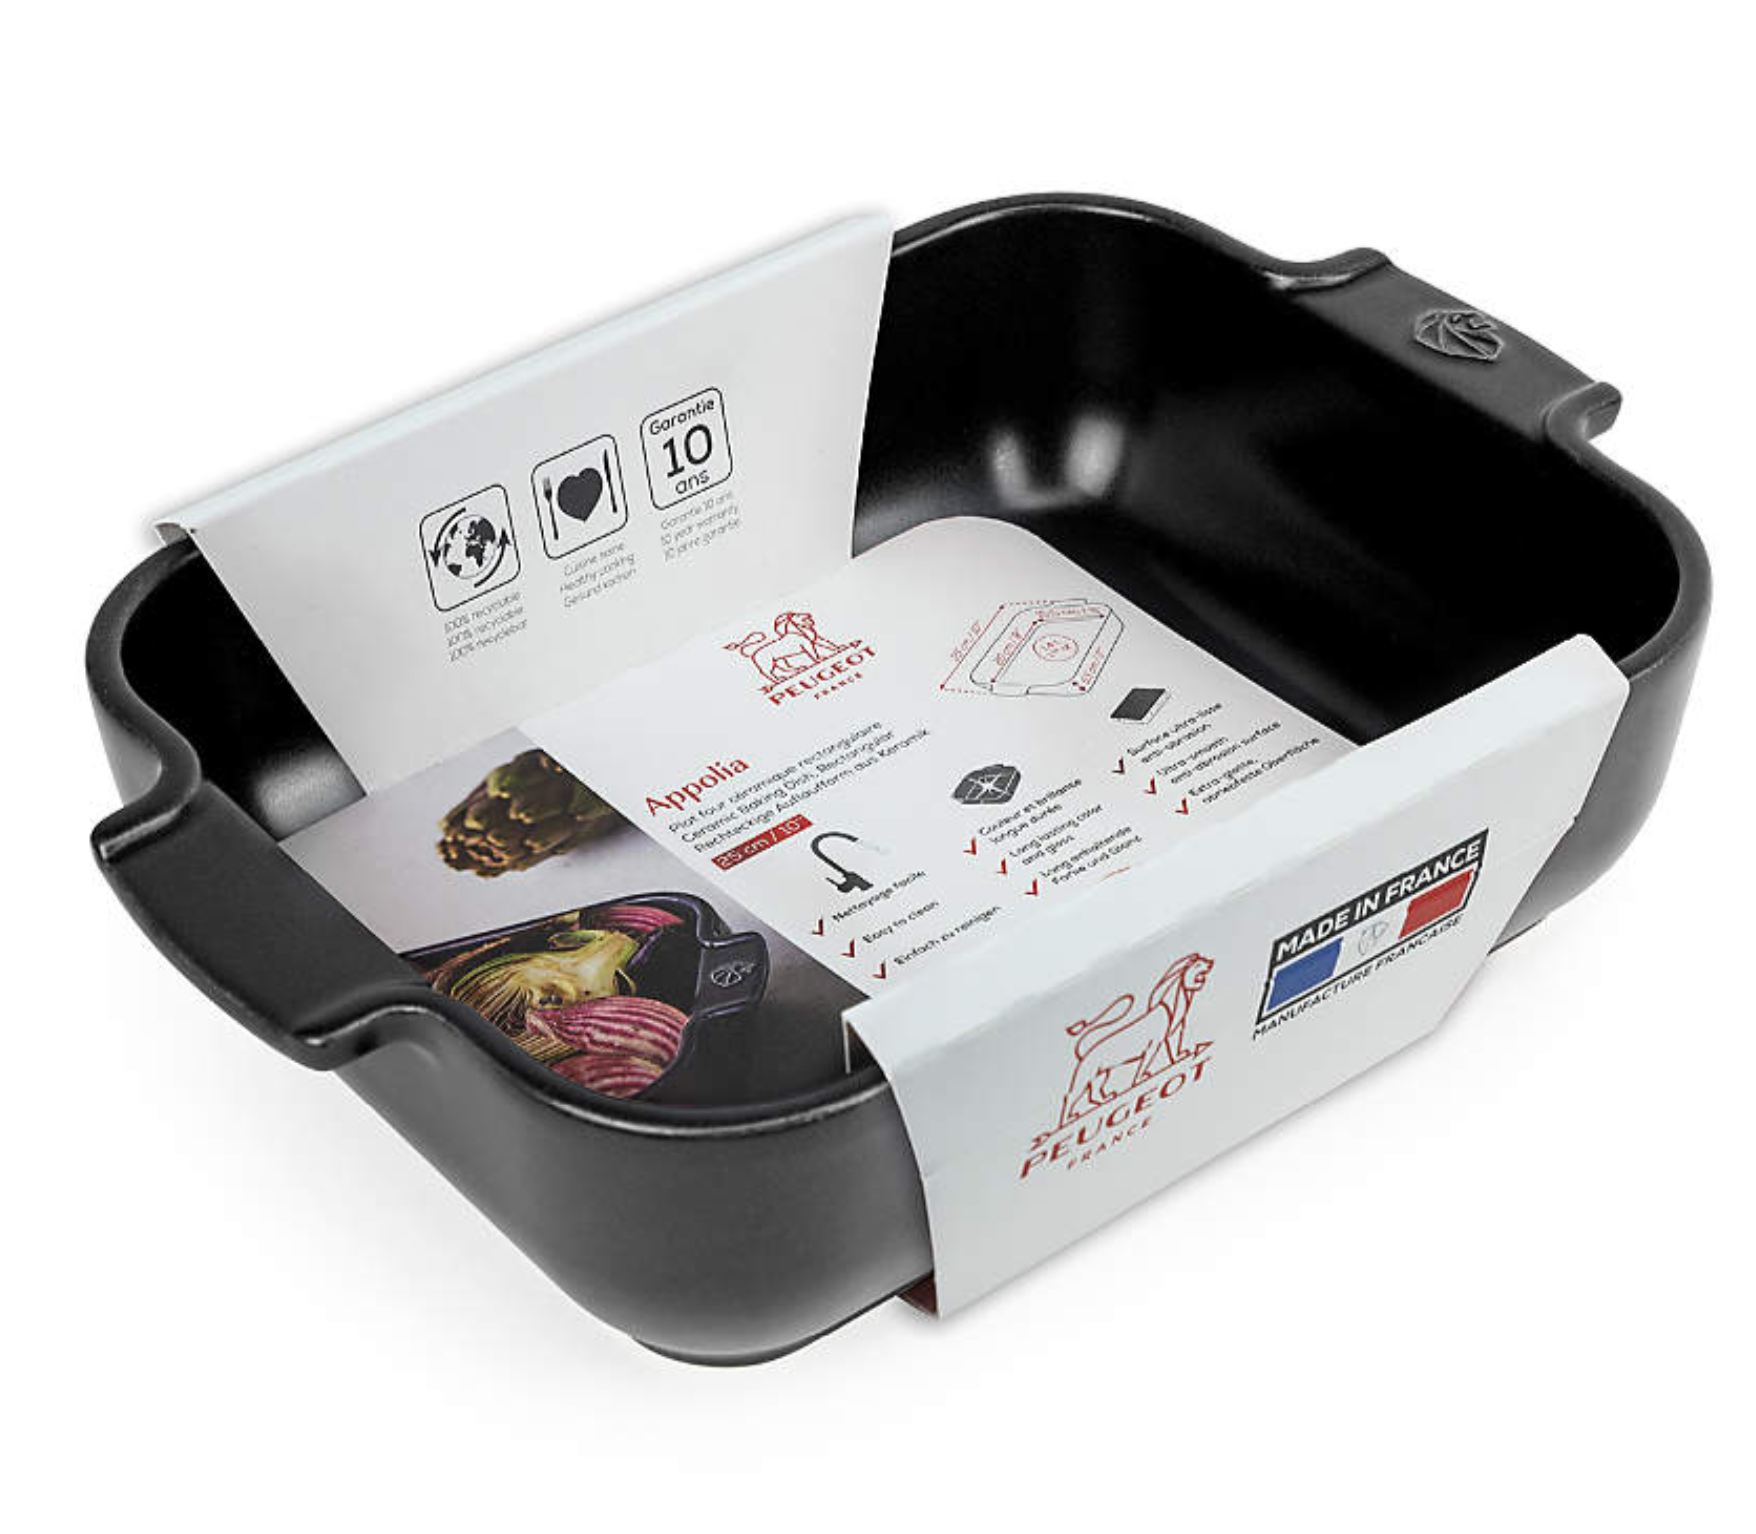 Peugeot Appolia Rectangular Ceramic Casserole Baking Dish – 10" – Satin Black